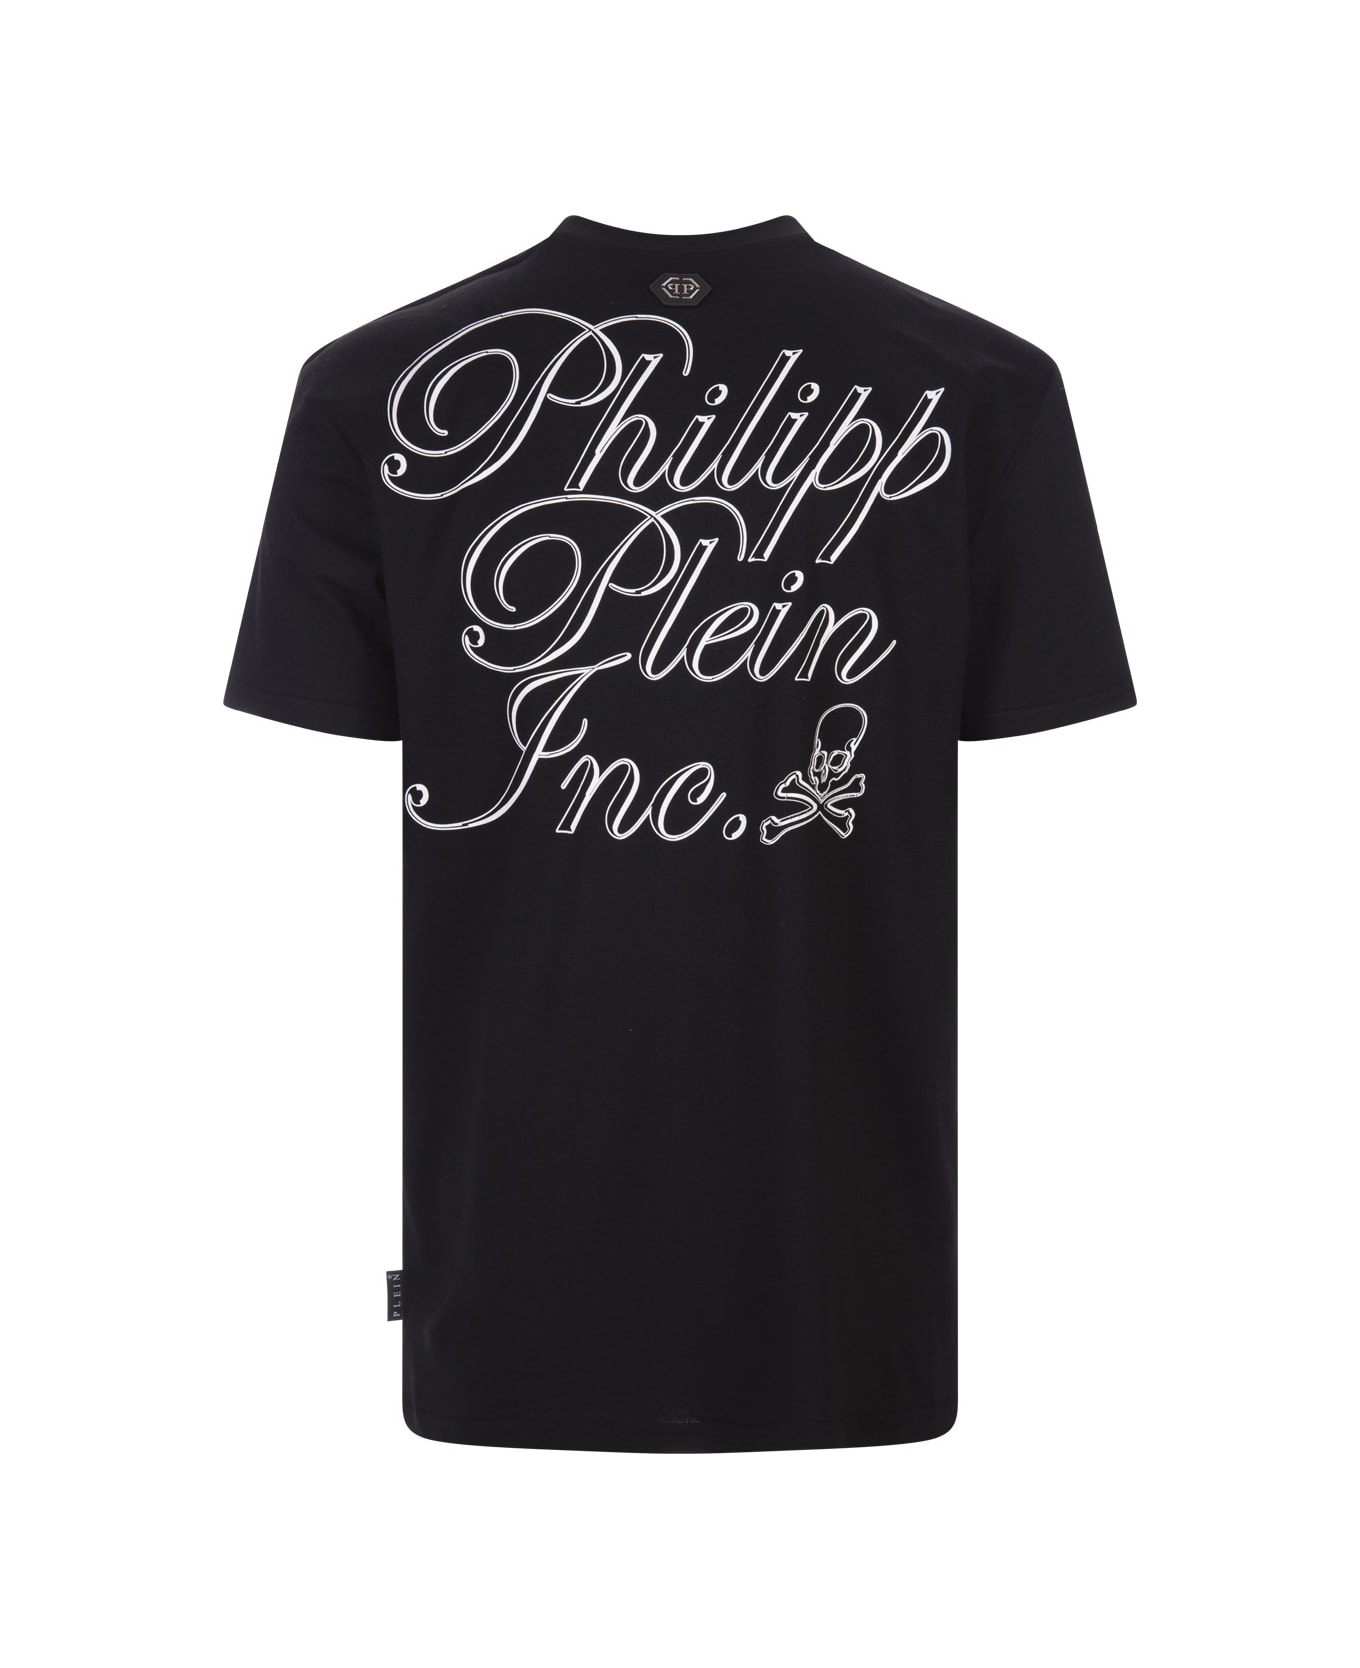 Philipp Plein Black T-shirt With Philipp Plein Tm Print On Front And Back - Black シャツ